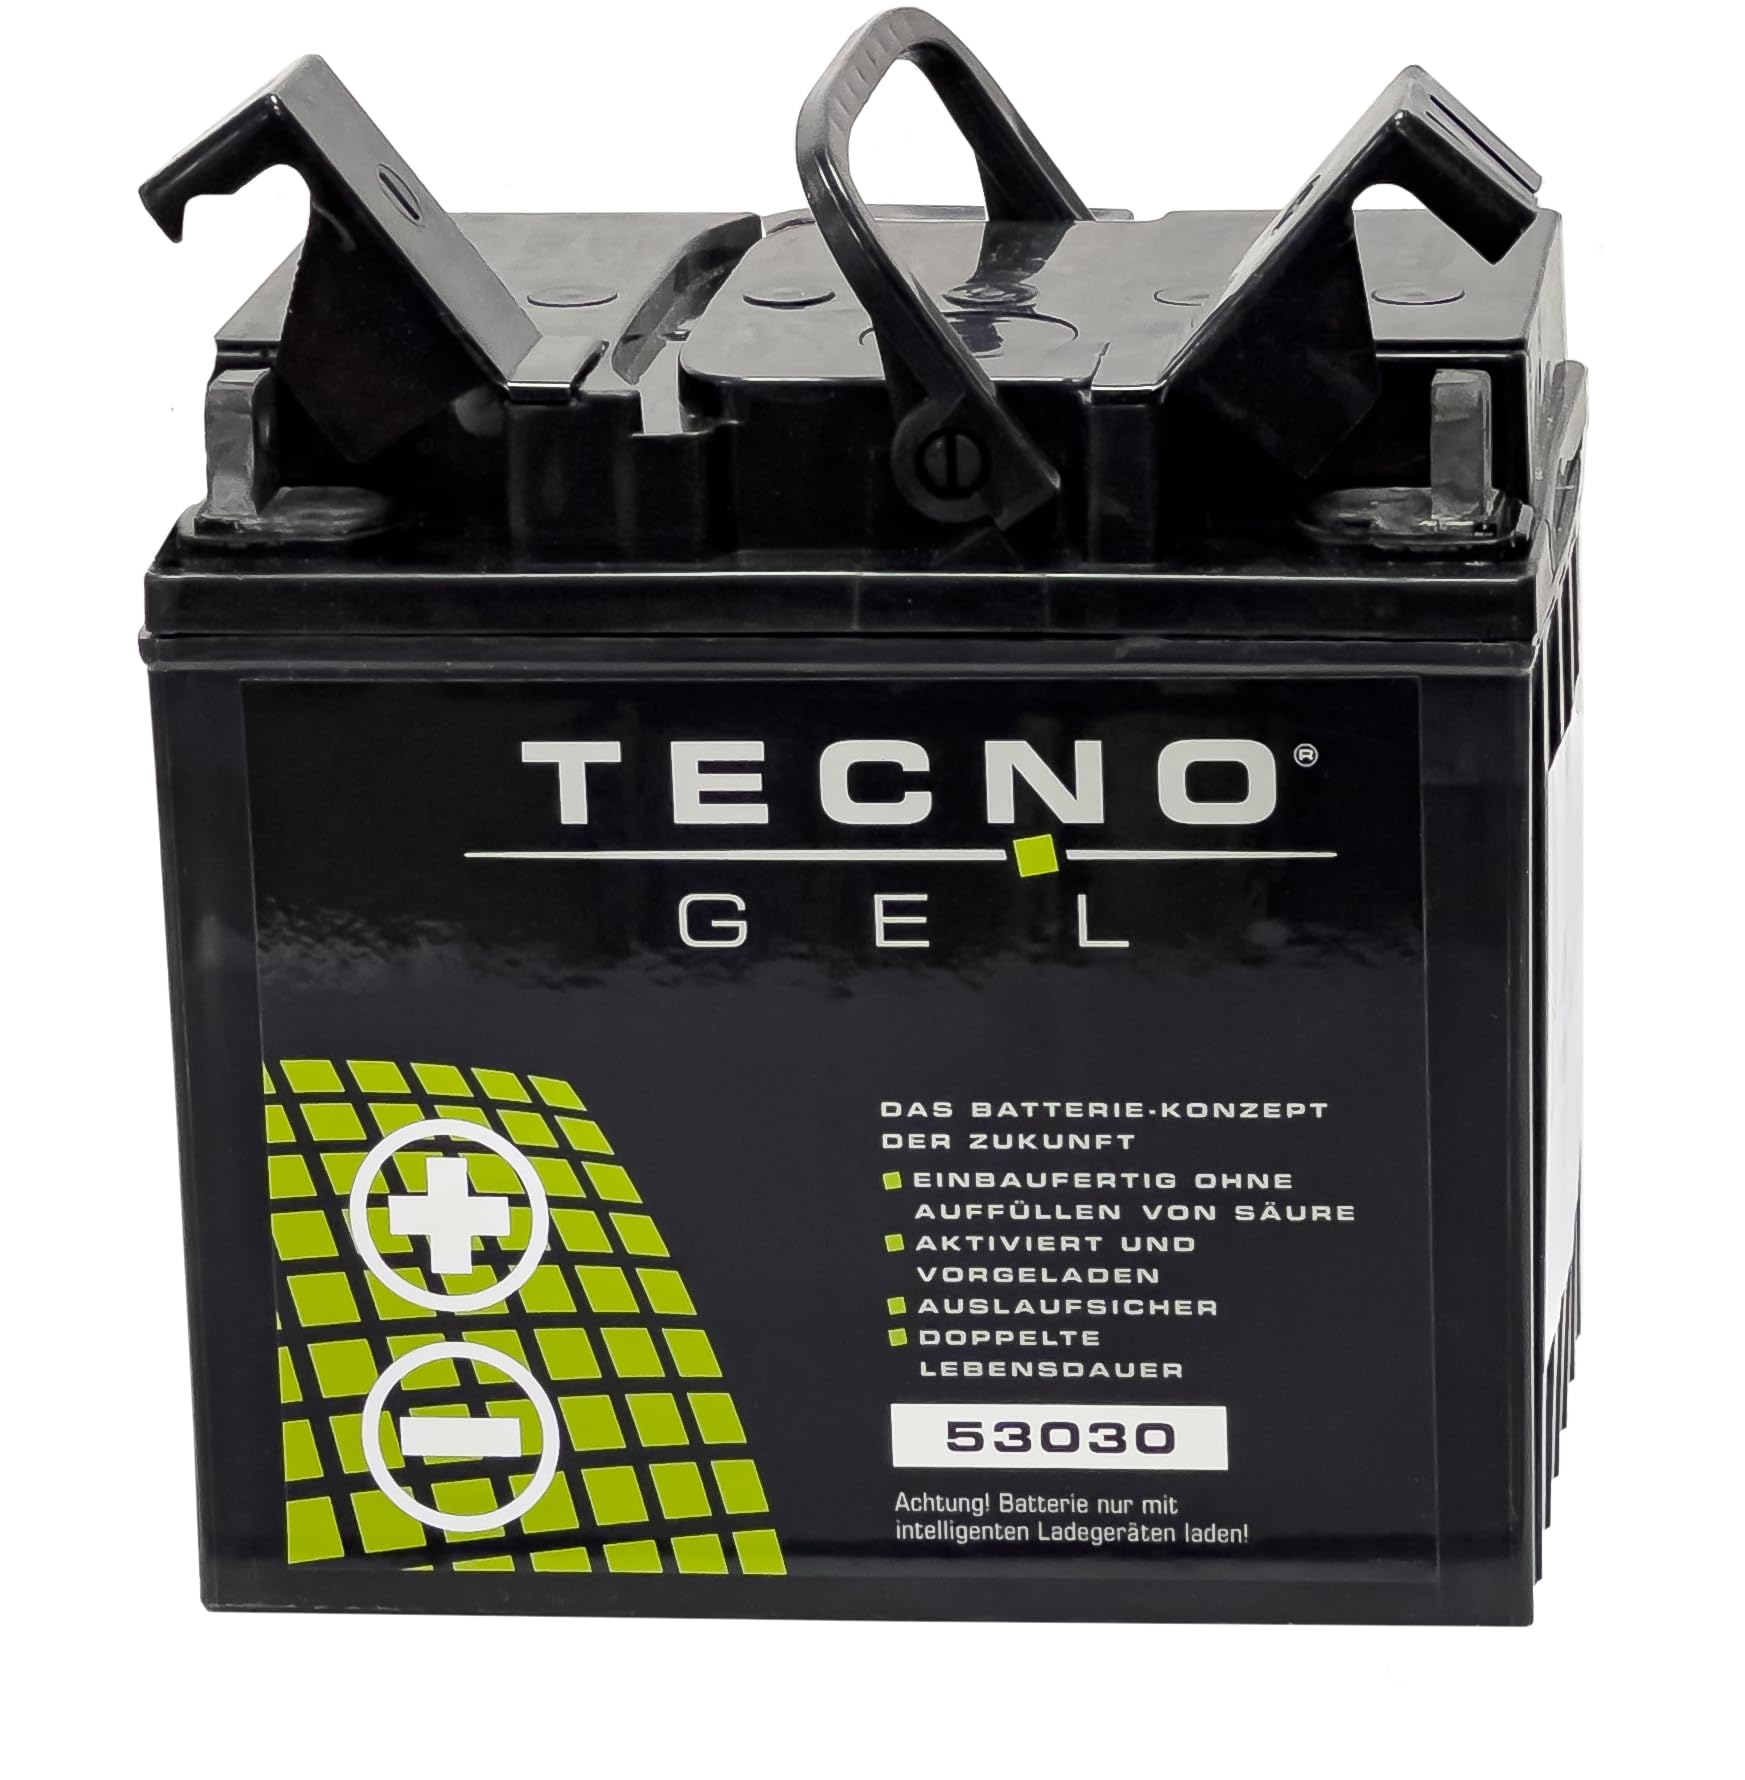 TECNO-GEL Motorrad Qualitäts Batterie 53030 für B-M-W R 80/7 N,S 1977-1980 12V Gel-Batterie 30 Ah 187x130x170 mm von Wirth-Federn